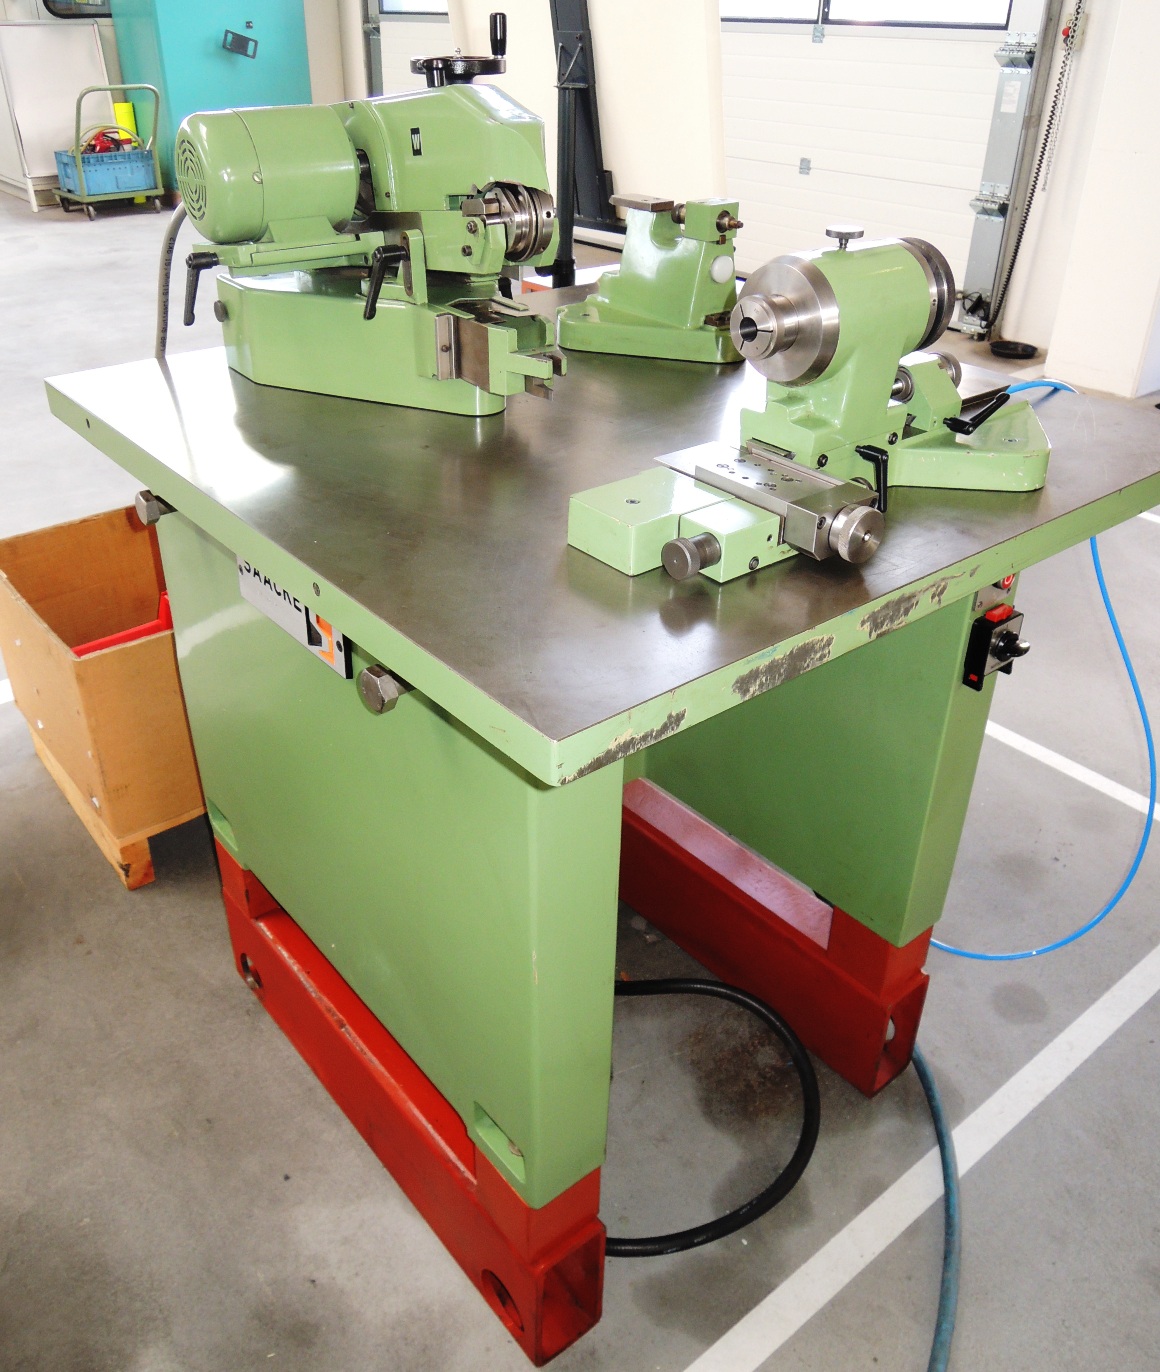 Used Grinding Machine Second Hand Grinding Machinery In Uk And Worldwide Machinespotter